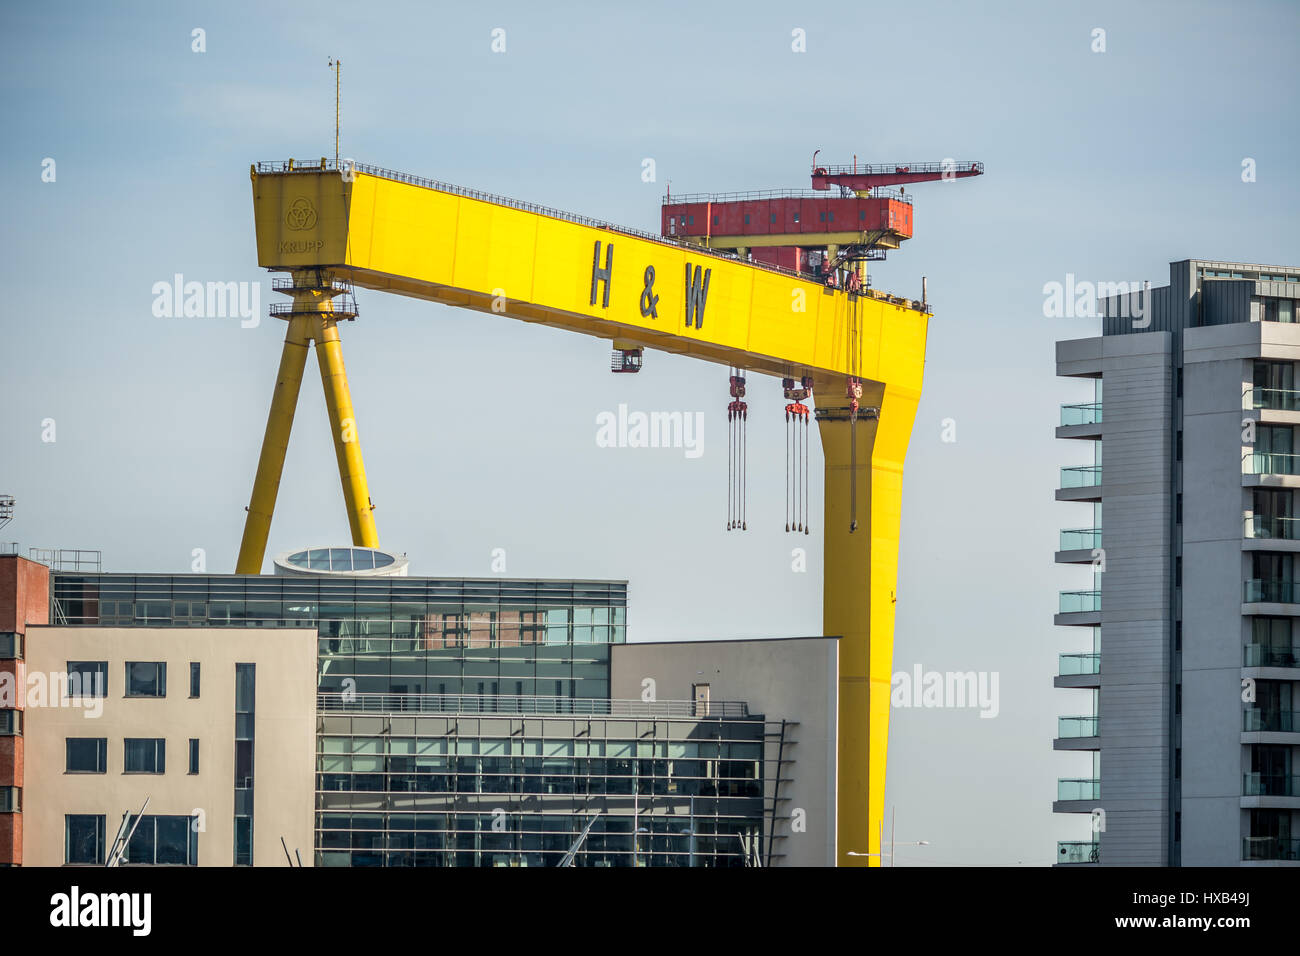 World renown Harland and Wolff crane in Titanic Quarter in Belfast. Stock Photo